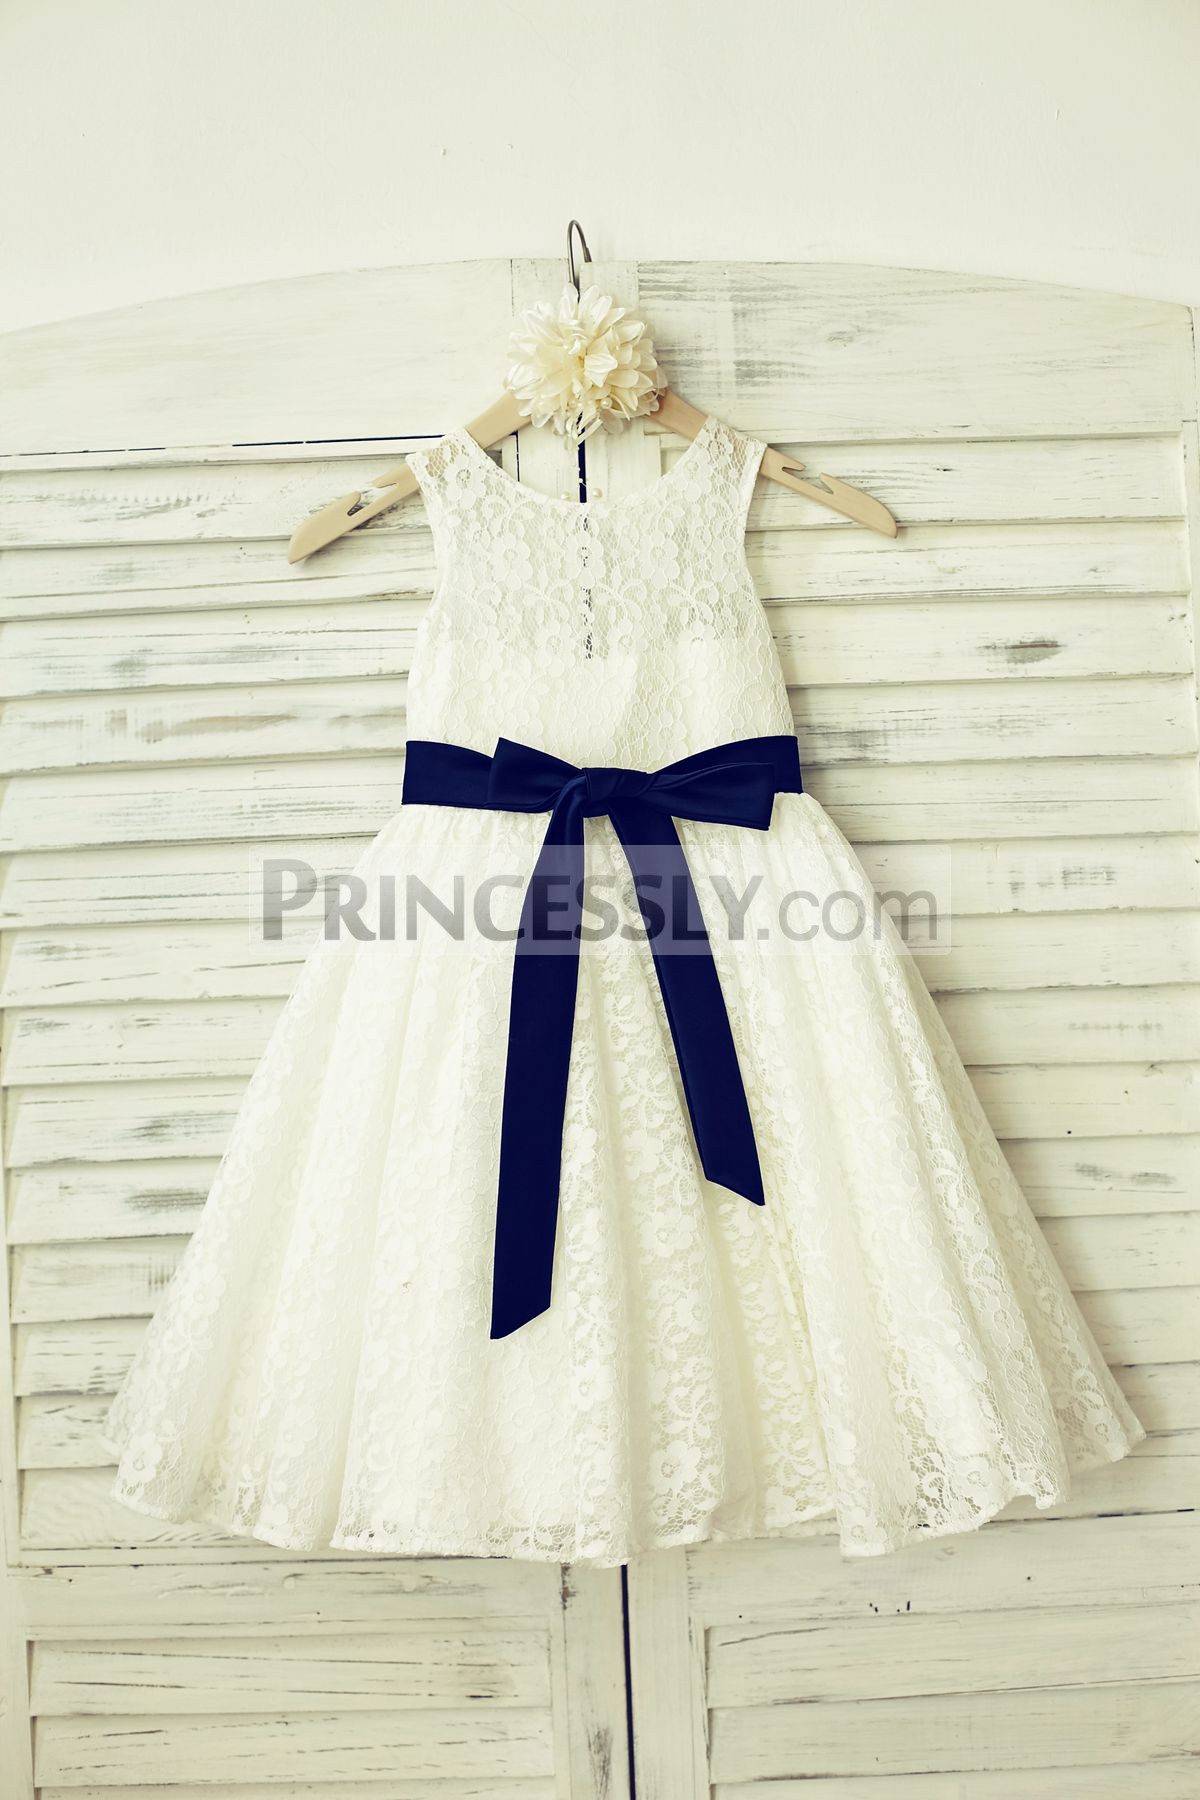 Ivory lace wedding flower girl dress